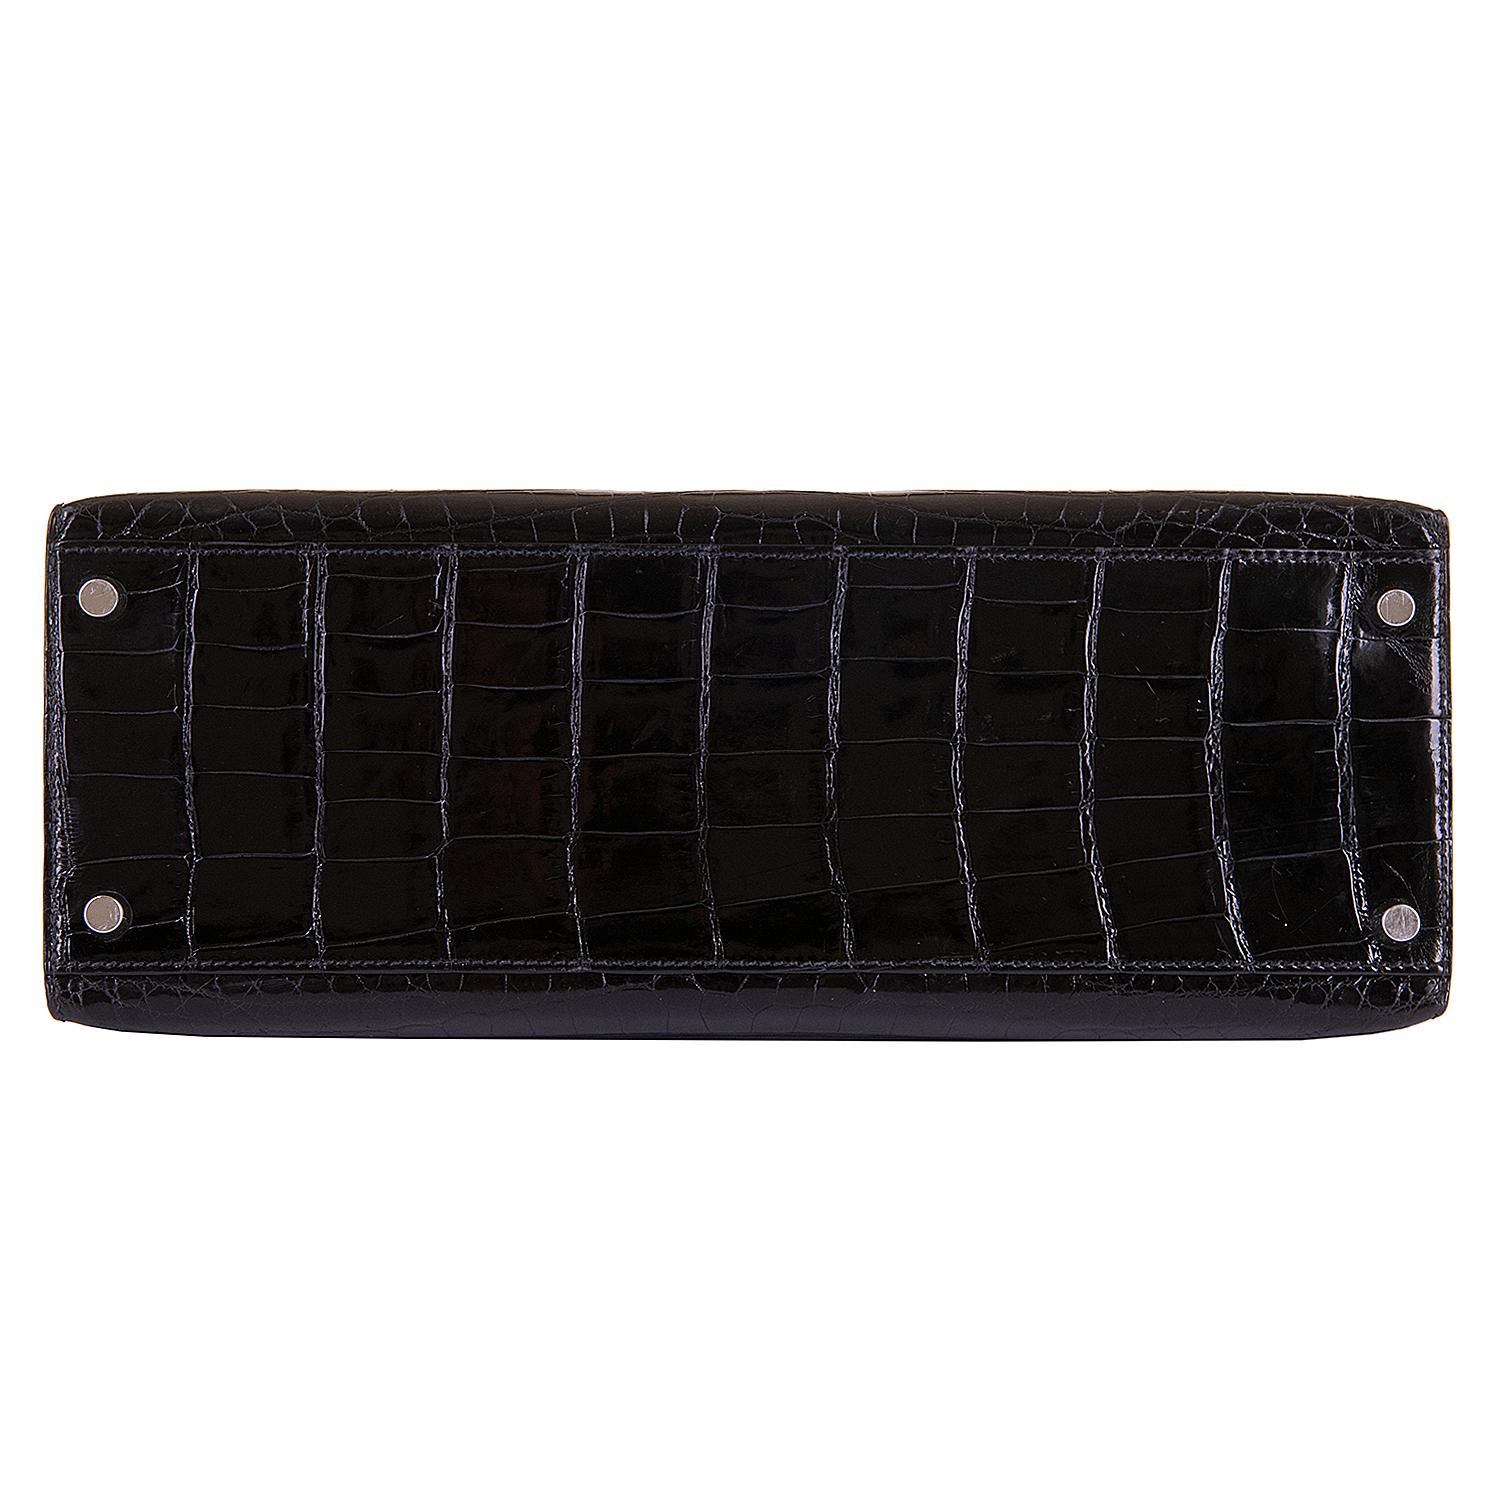 Rare Hermes Black Crocodile Kelly 32 Bag with Palladium Hardware - Pristine 4